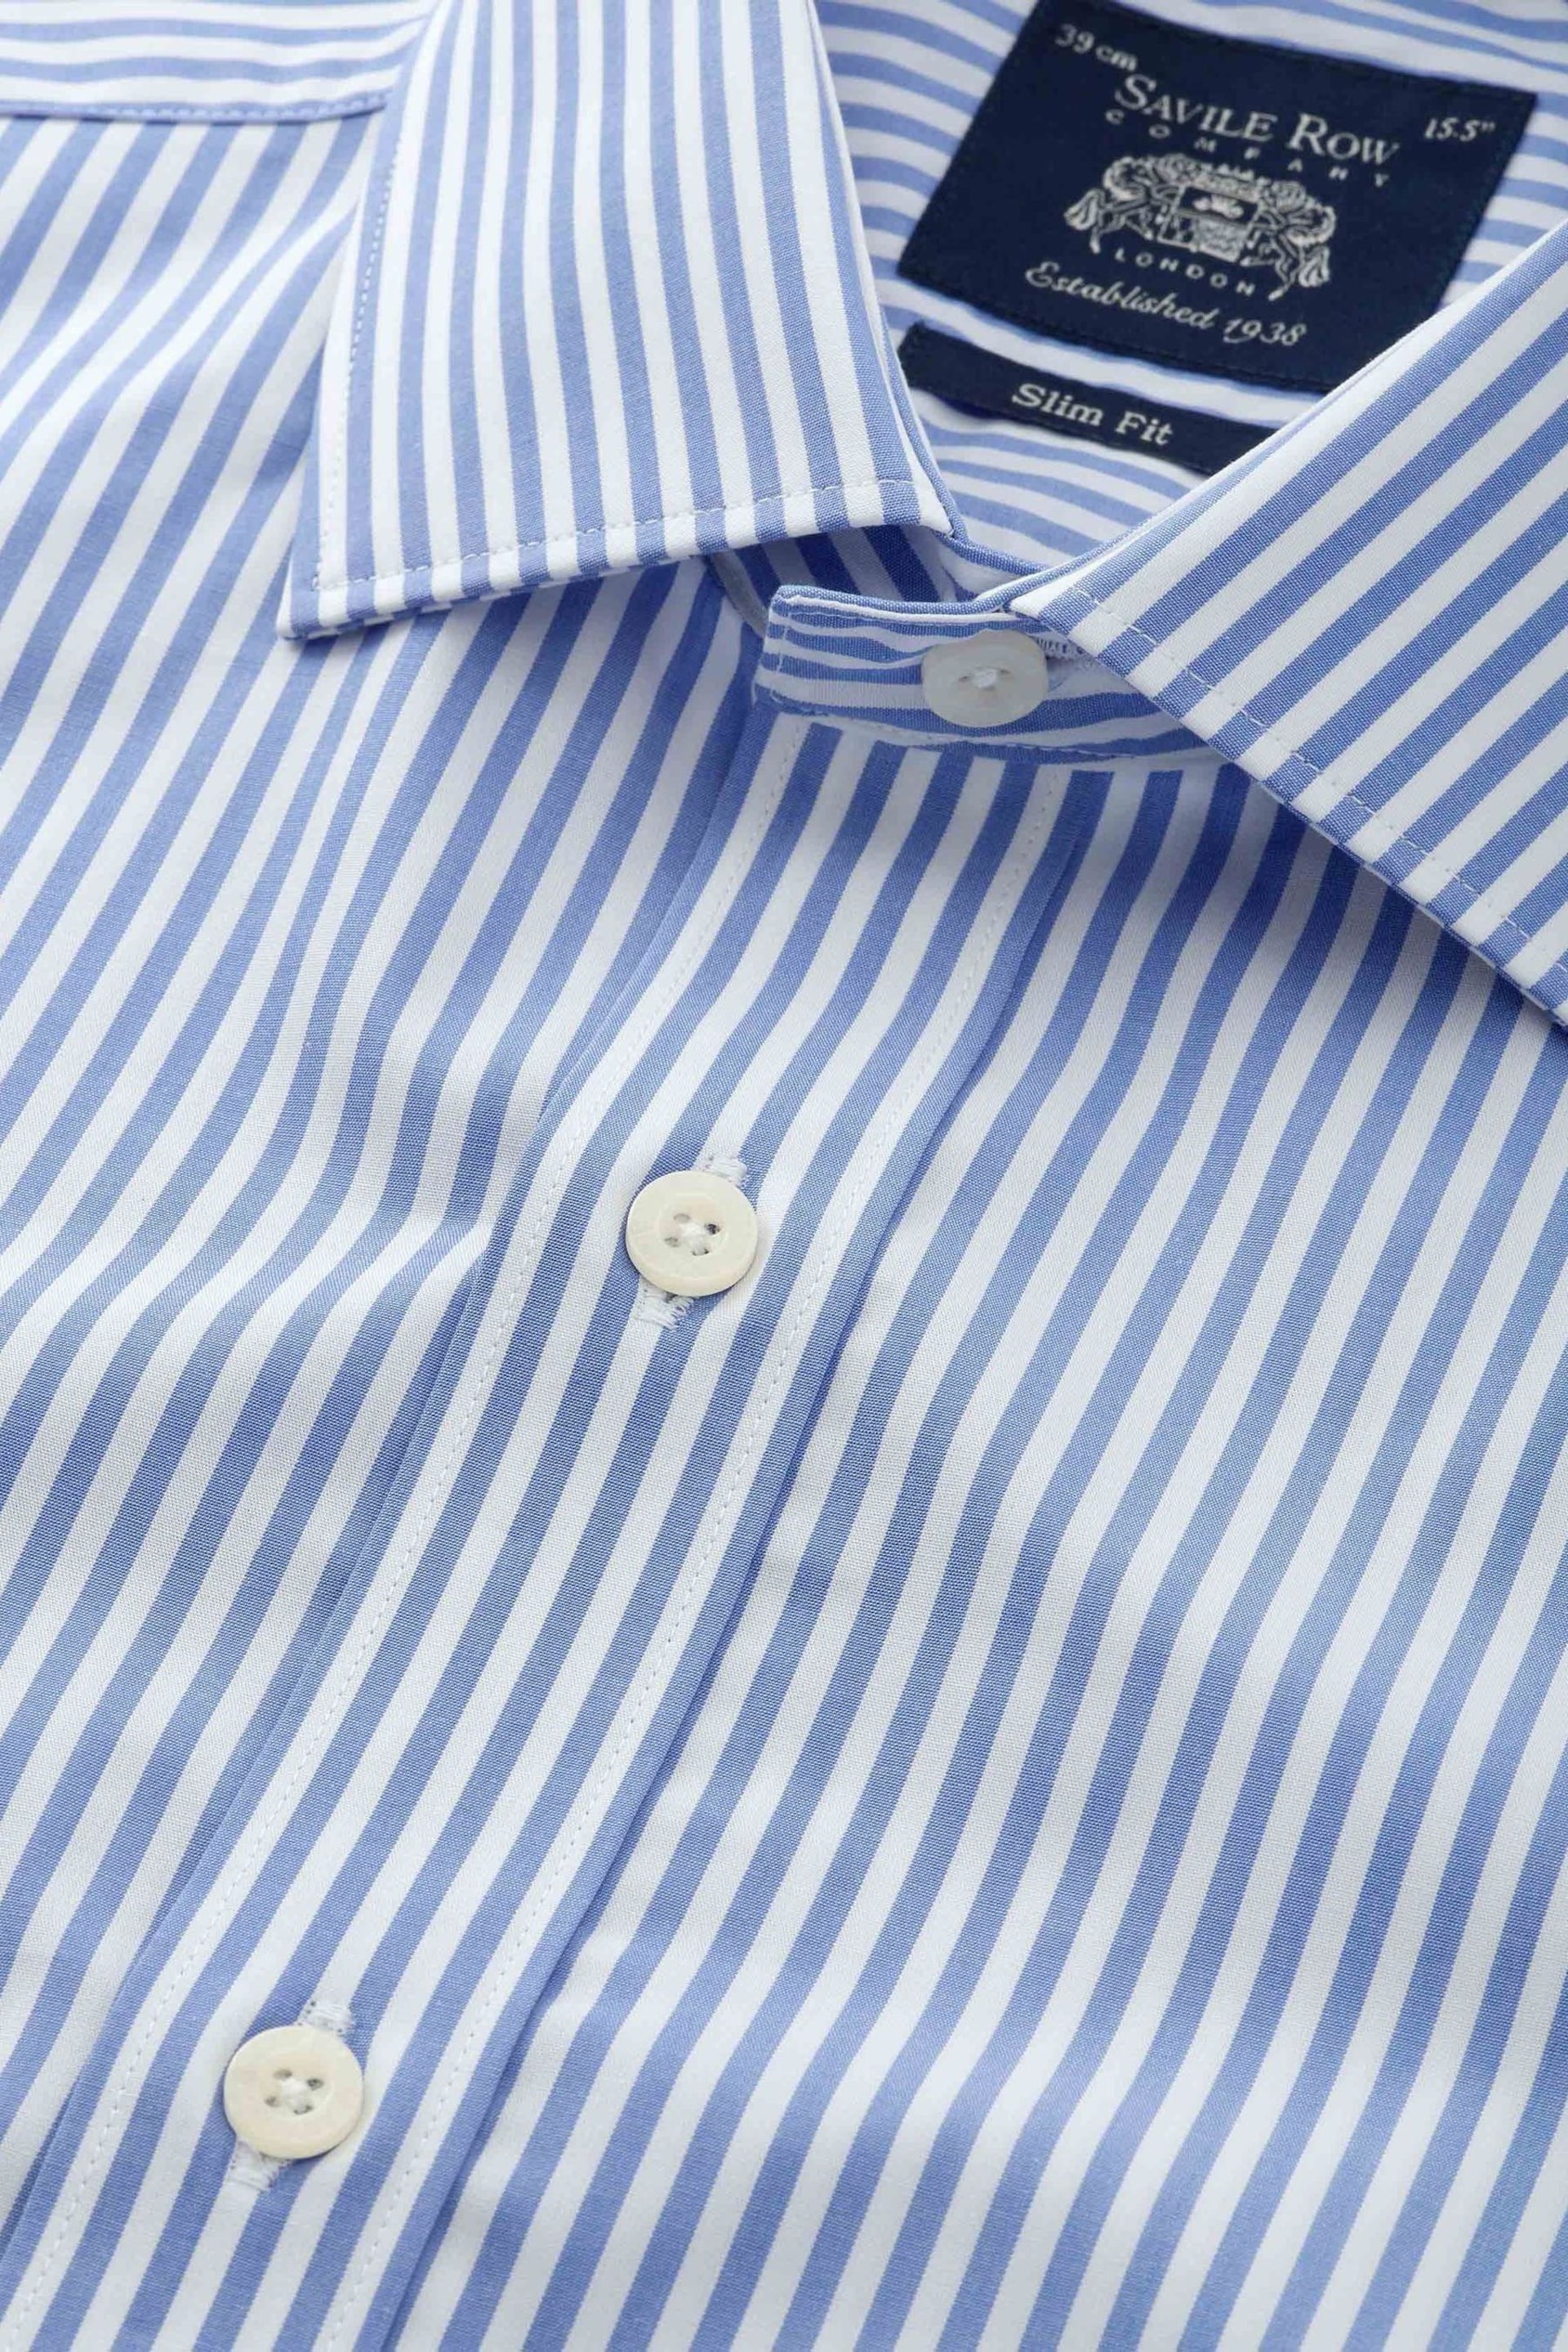 Savile Row Company Blue Stripe Slim Fit Single Cuff Shirt - Image 5 of 5